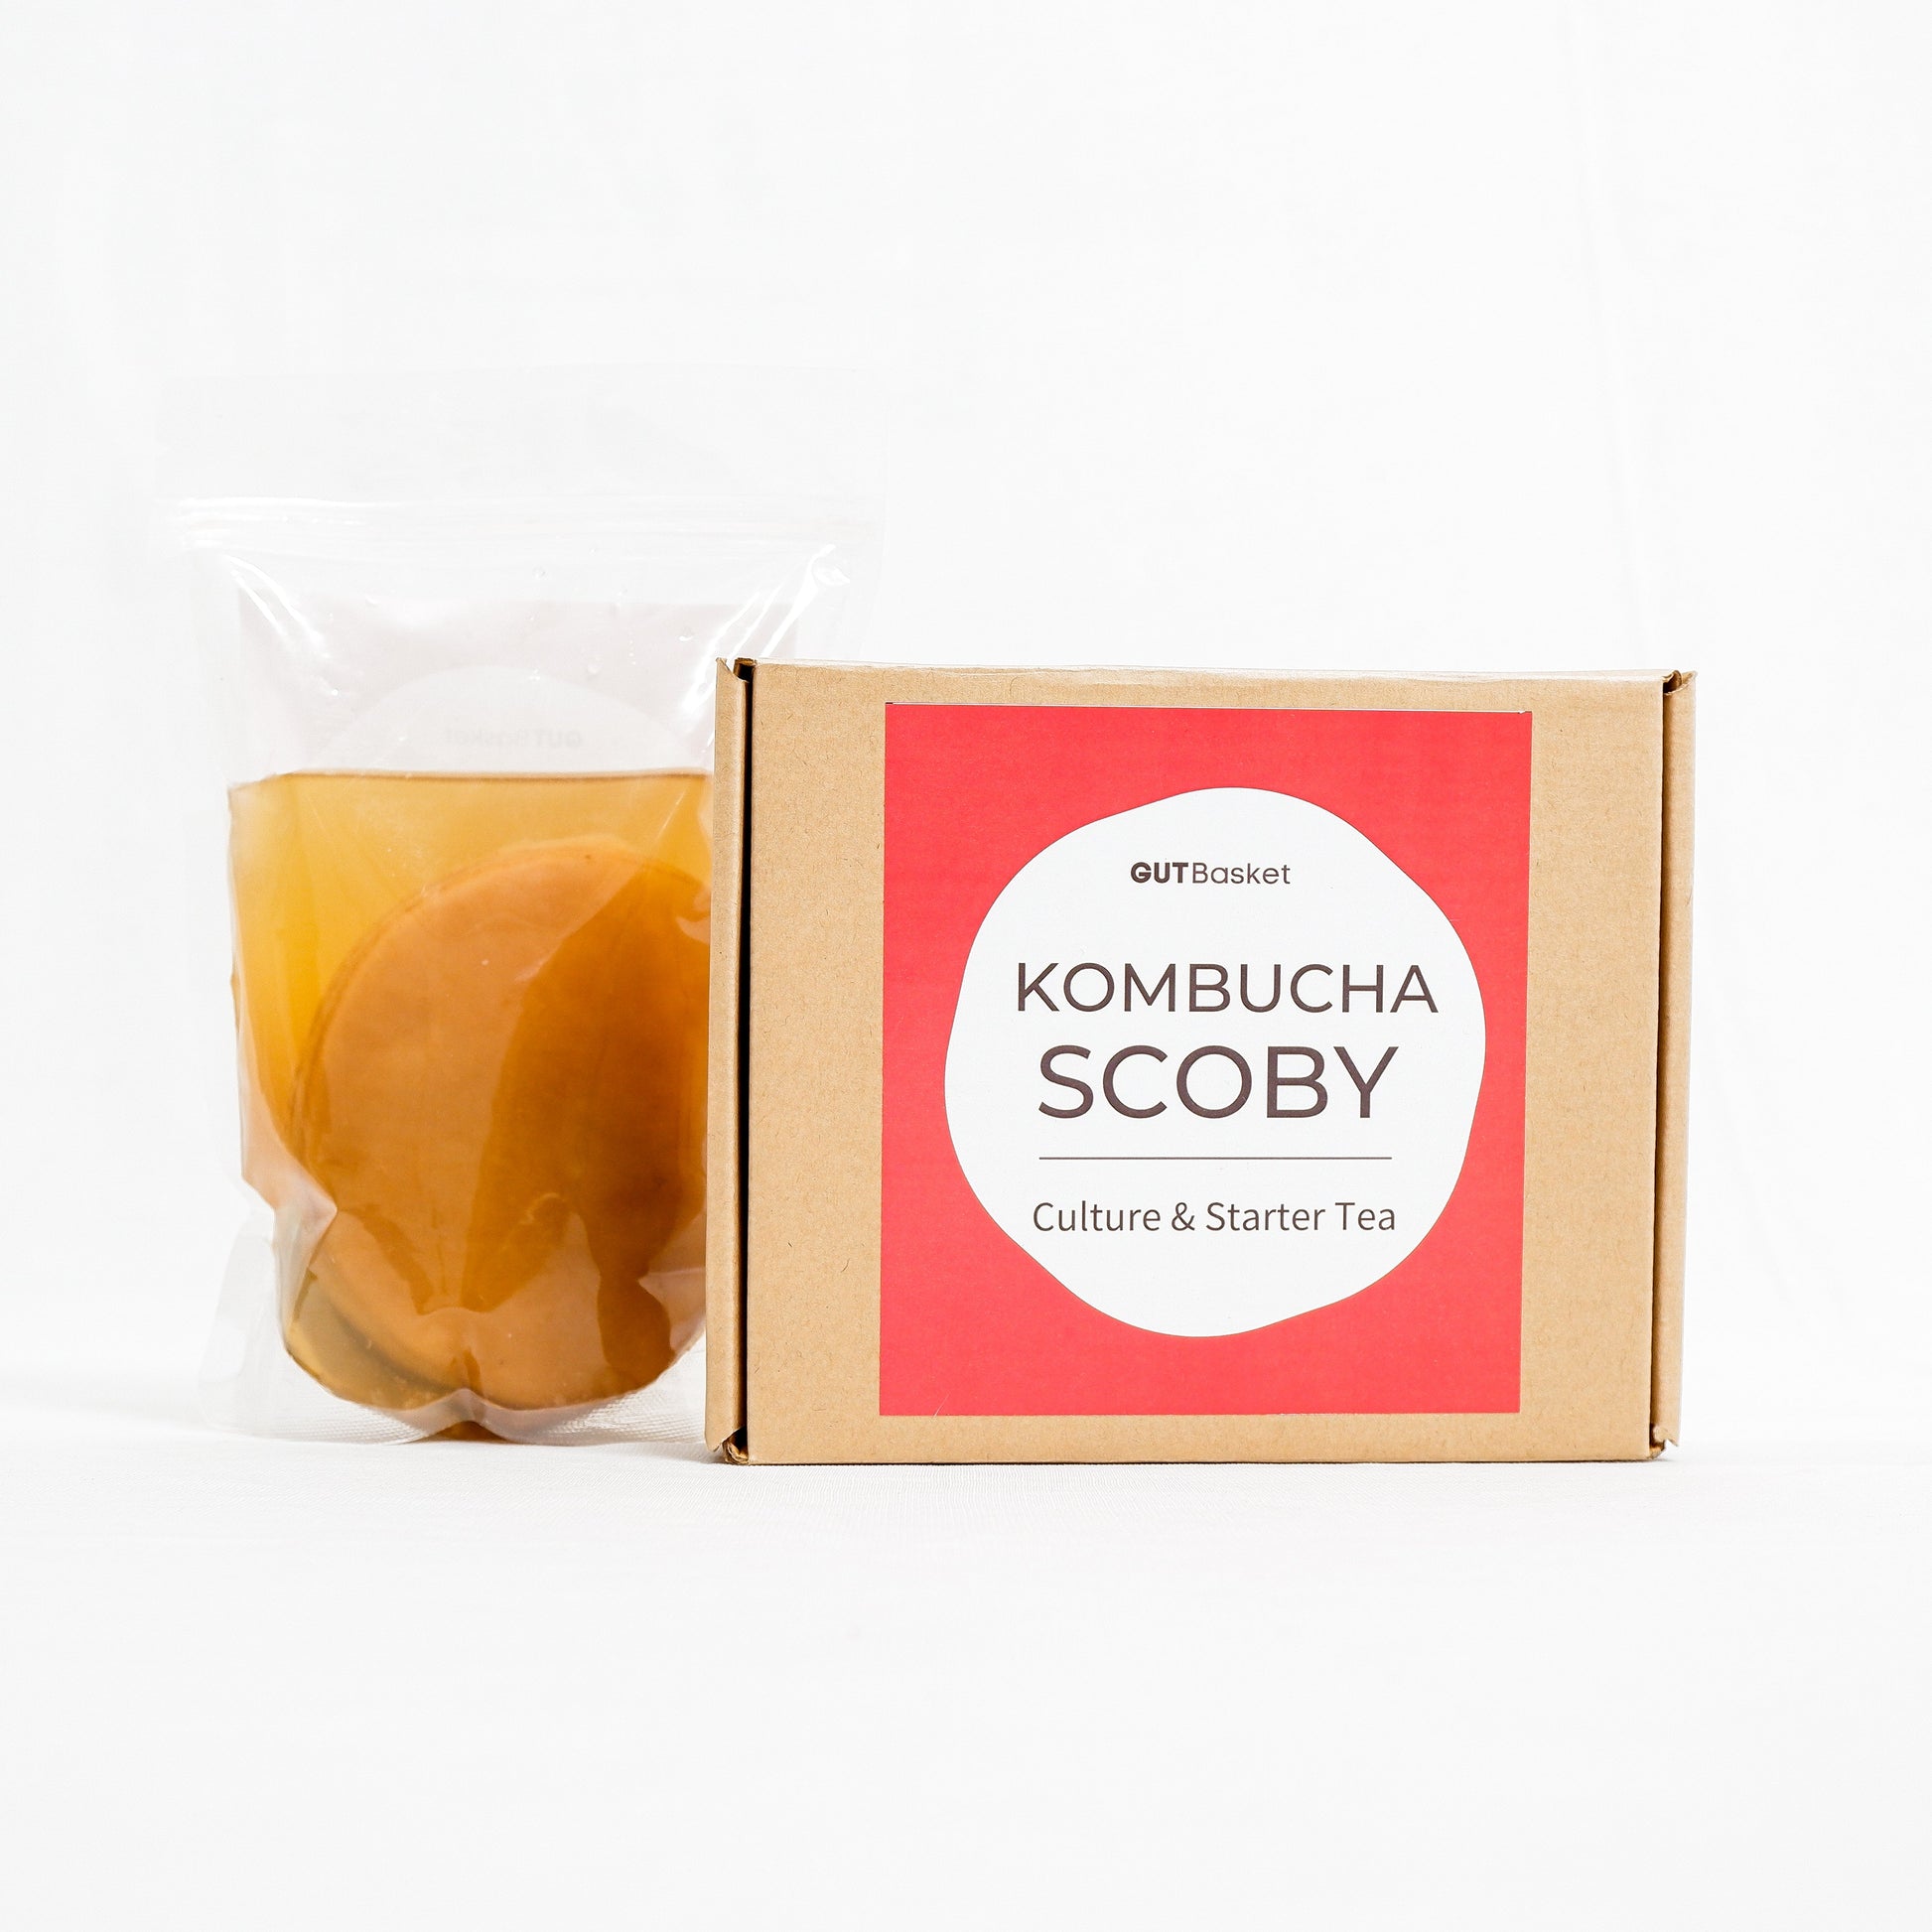 Choosing your kombucha supplies